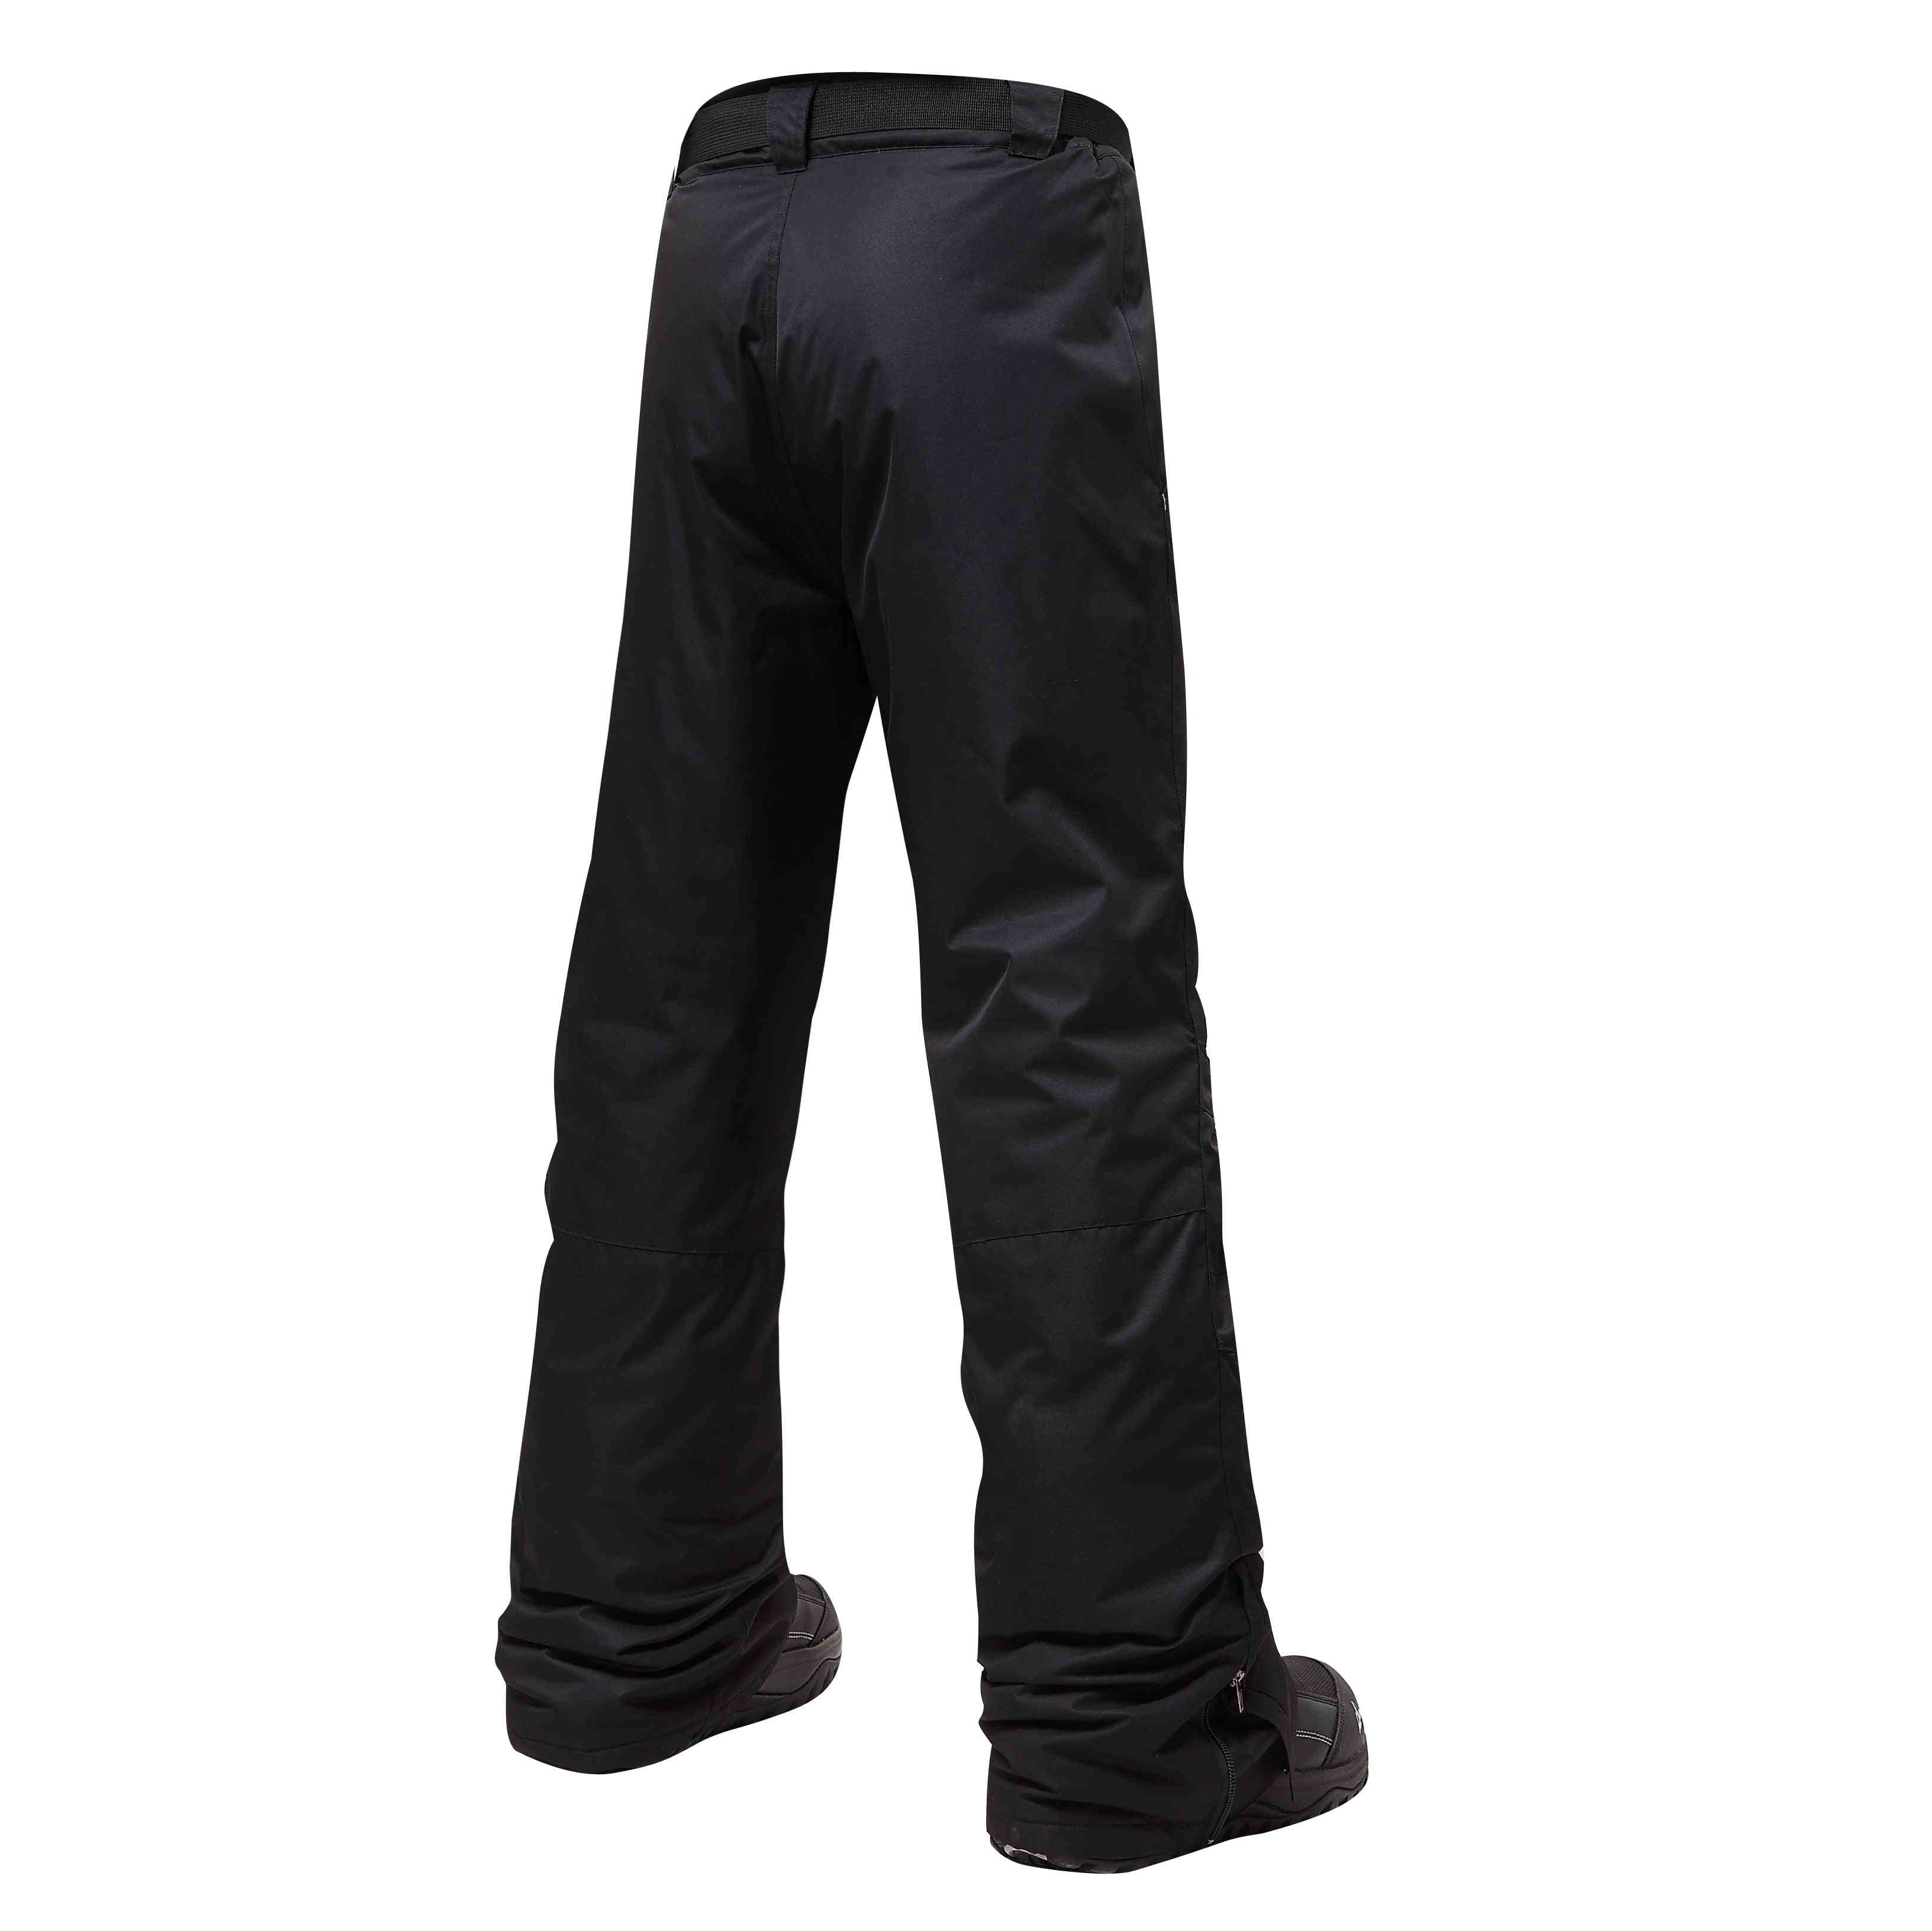 -Pantalones de snowboard para hombres de 30 grados, pantalones impermeables